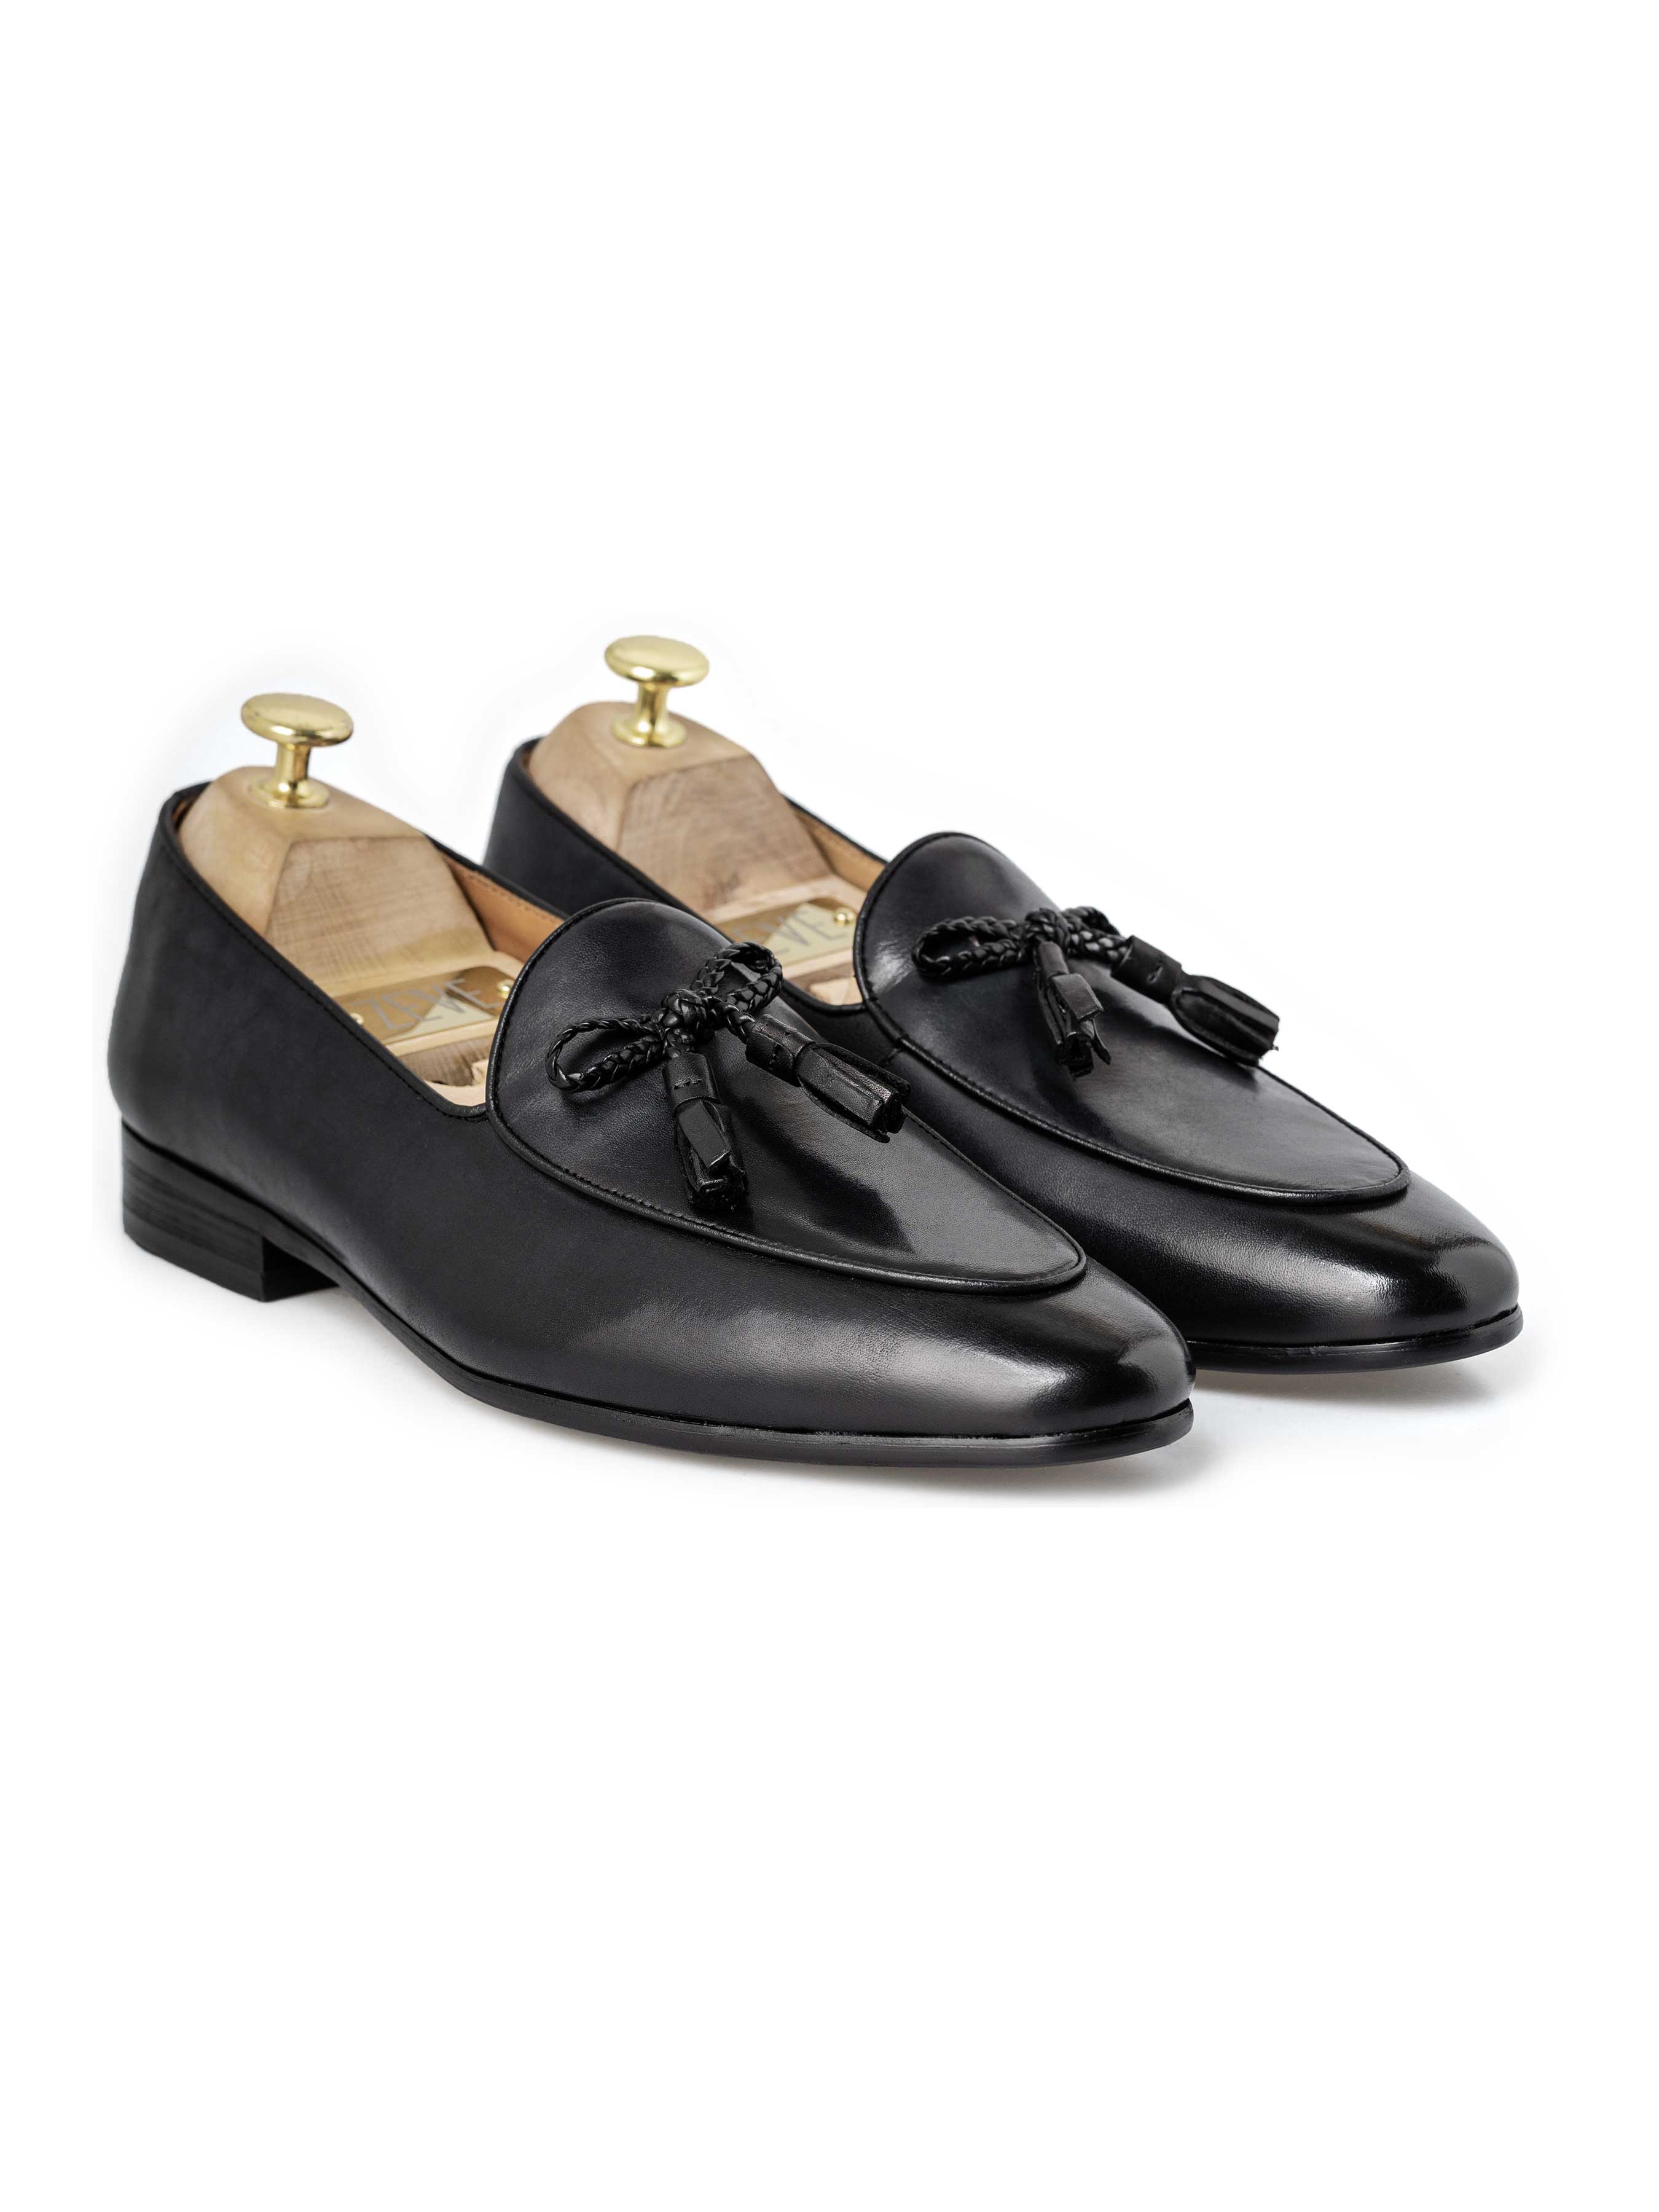 Belgian Loafer Ribbon Tassel -  Black Grey (Hand Painted Patina) - Zeve Shoes